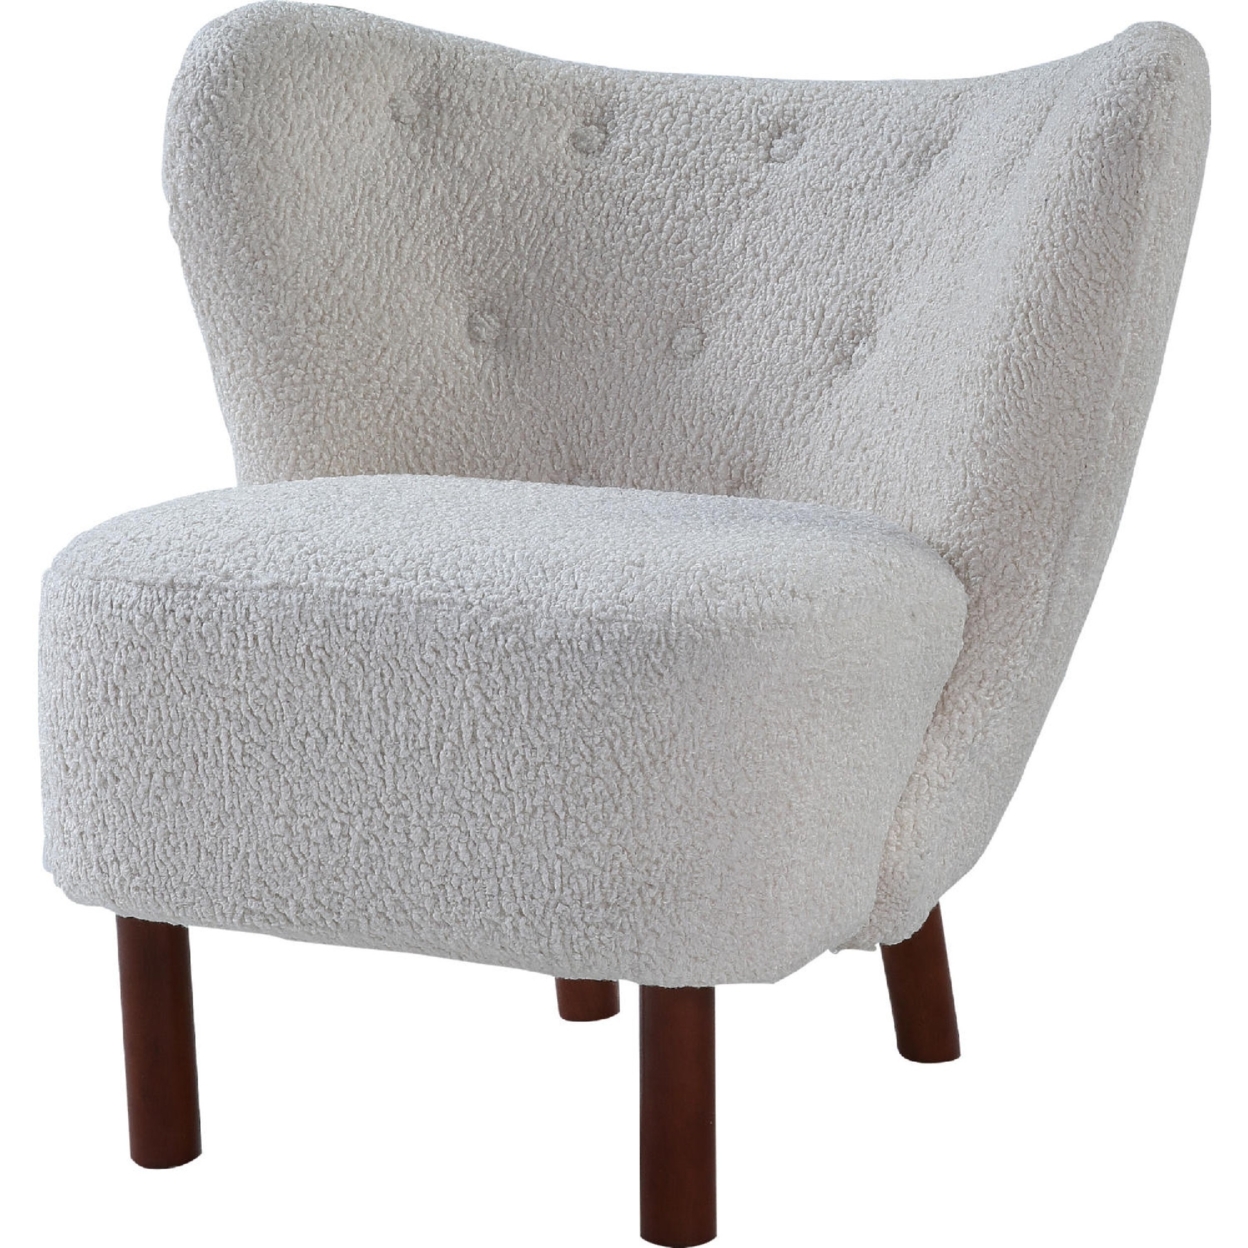 34 Inch Modern Tufted Wingback Accent Chair, Teddy Sherpa Fabric, White- Saltoro Sherpi